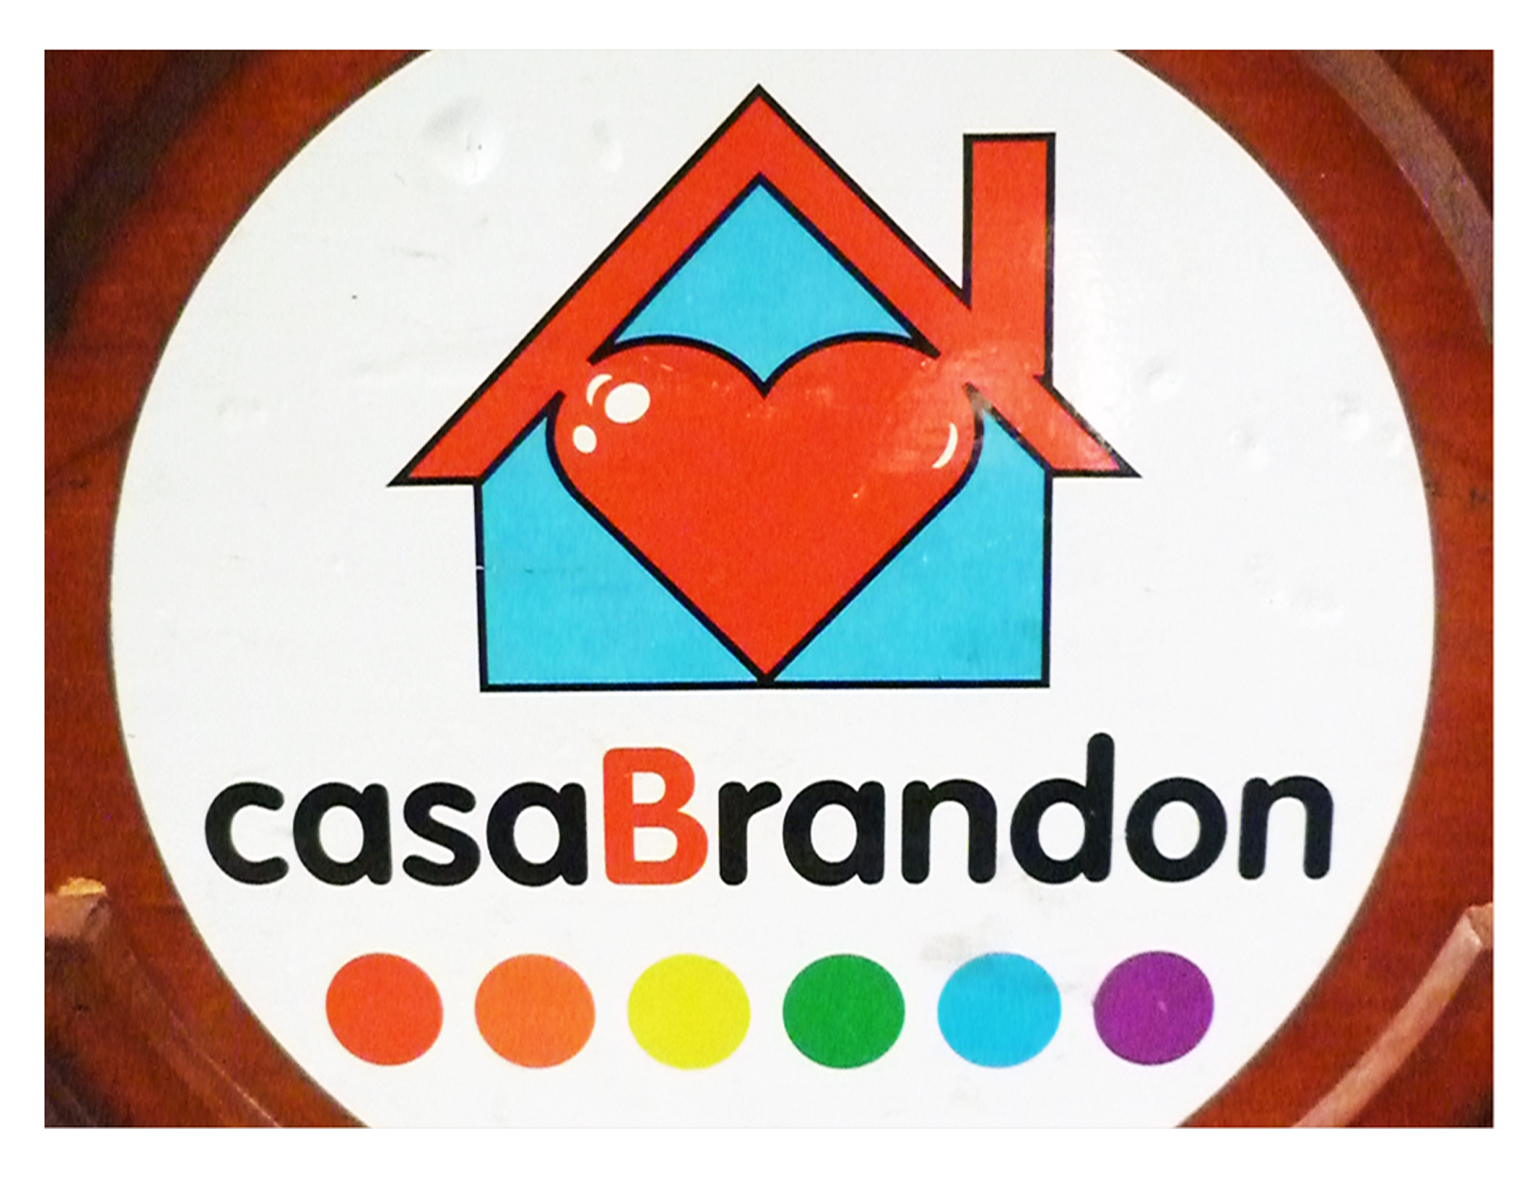 Casa Brandon